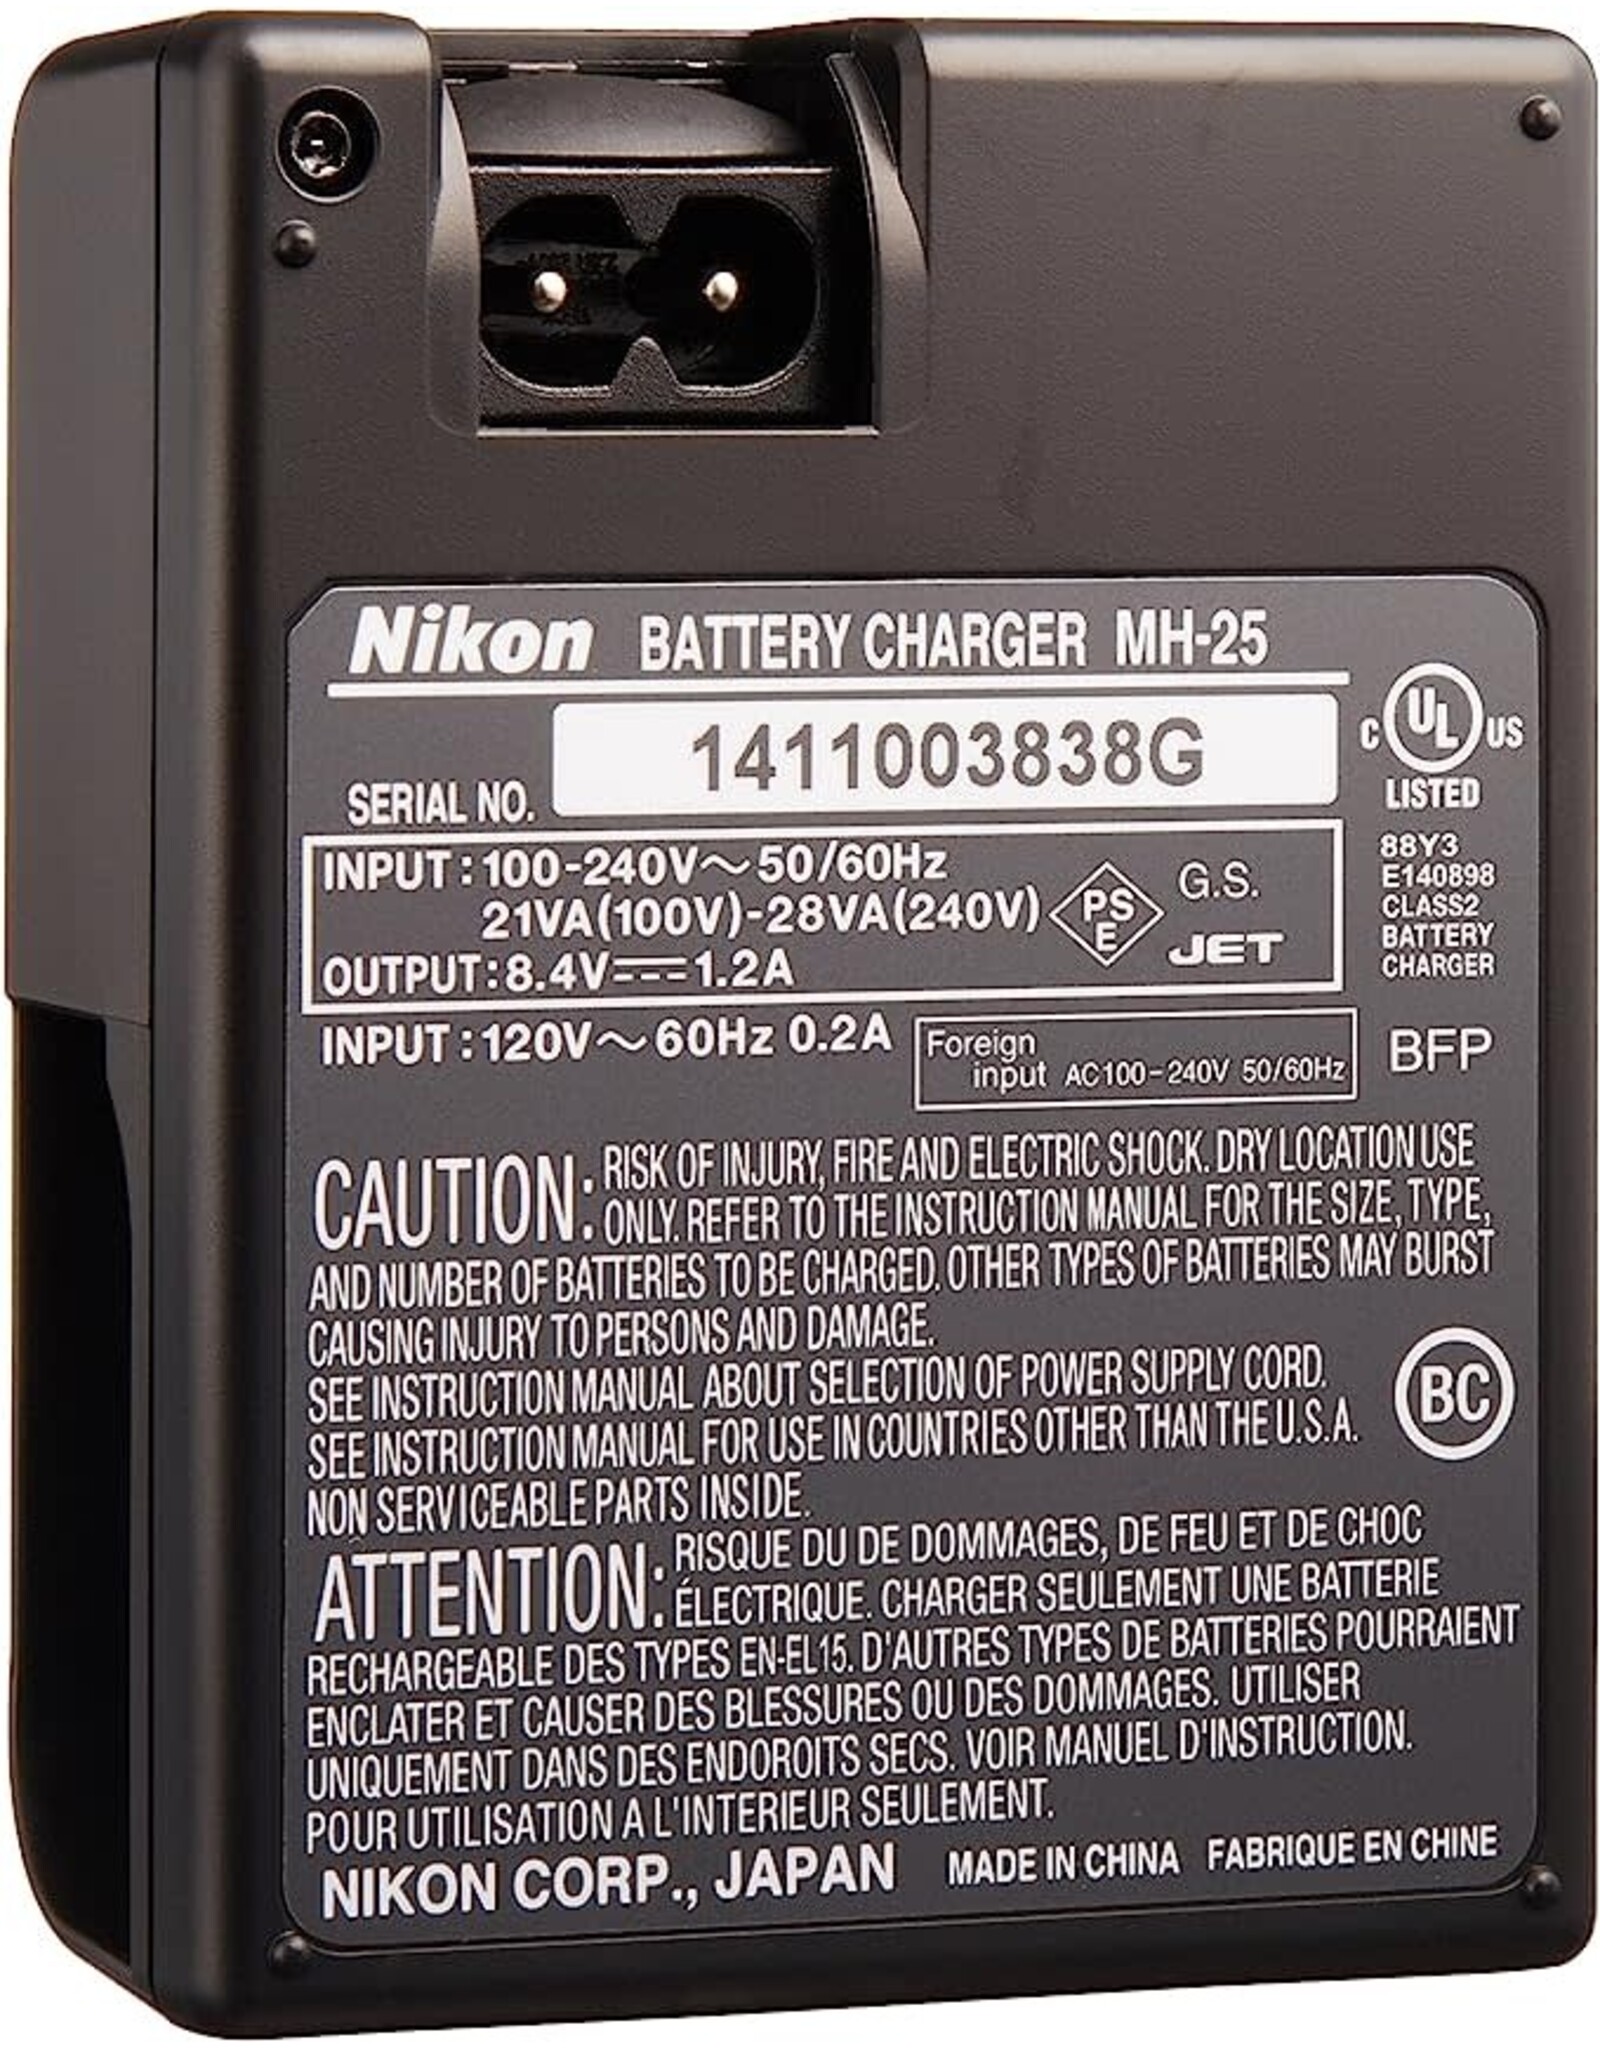 Nikon MH-25 Quick Charger for EN-EL15 Li-ion Battery compatible with Nikon D7000 and V1 Digital Cameras